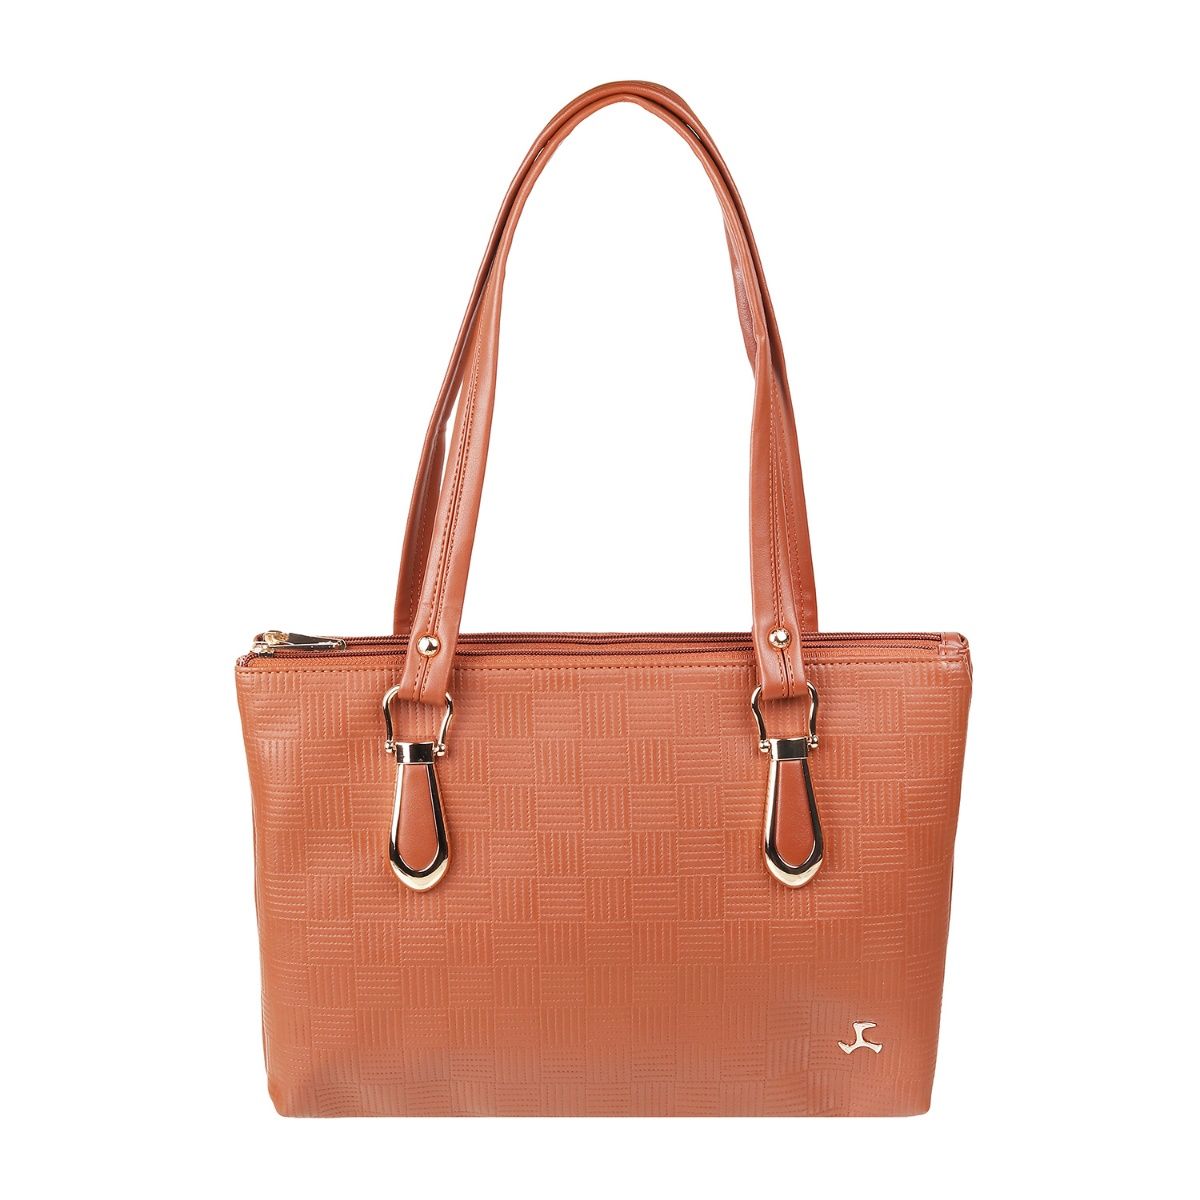 Safara Modern Ladies Plain Brown Leather Handbag at Rs 749 in Mumbai